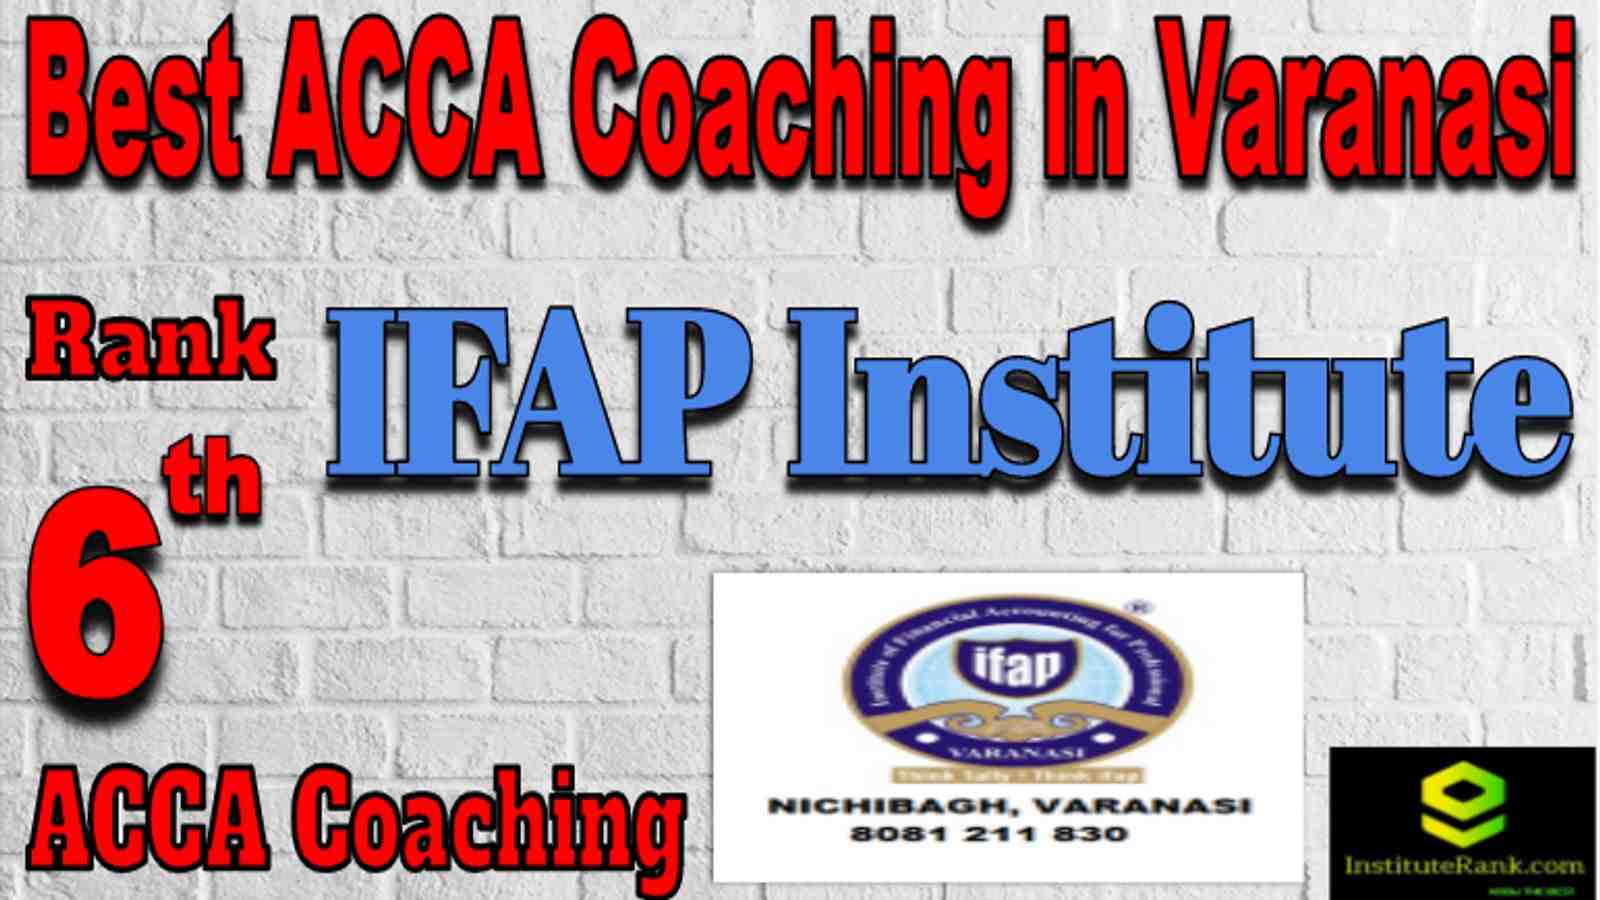 Rank 6 Best ACCA Coaching in Varanasi